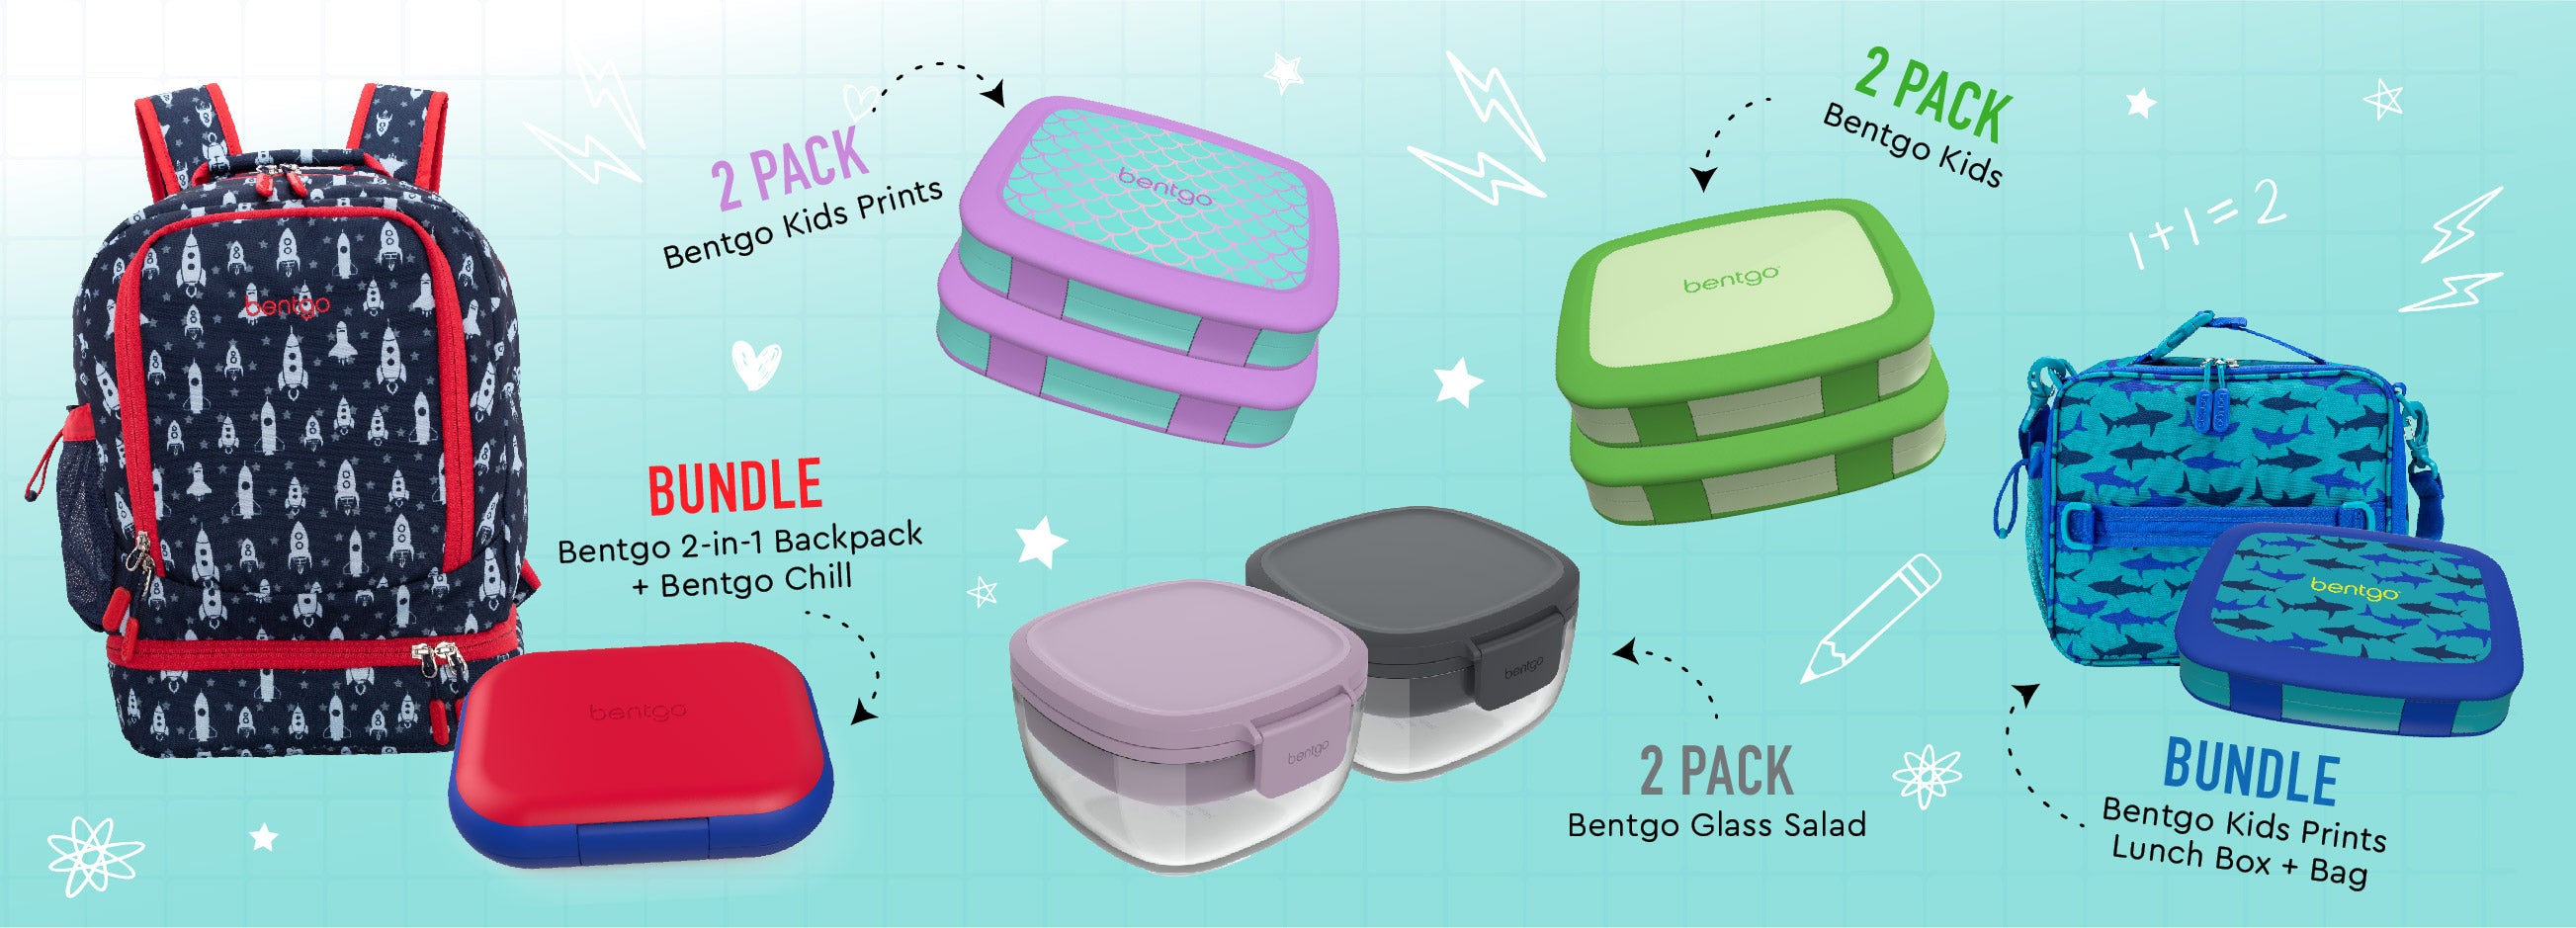 Bento box bundles for back to school | Bentgo